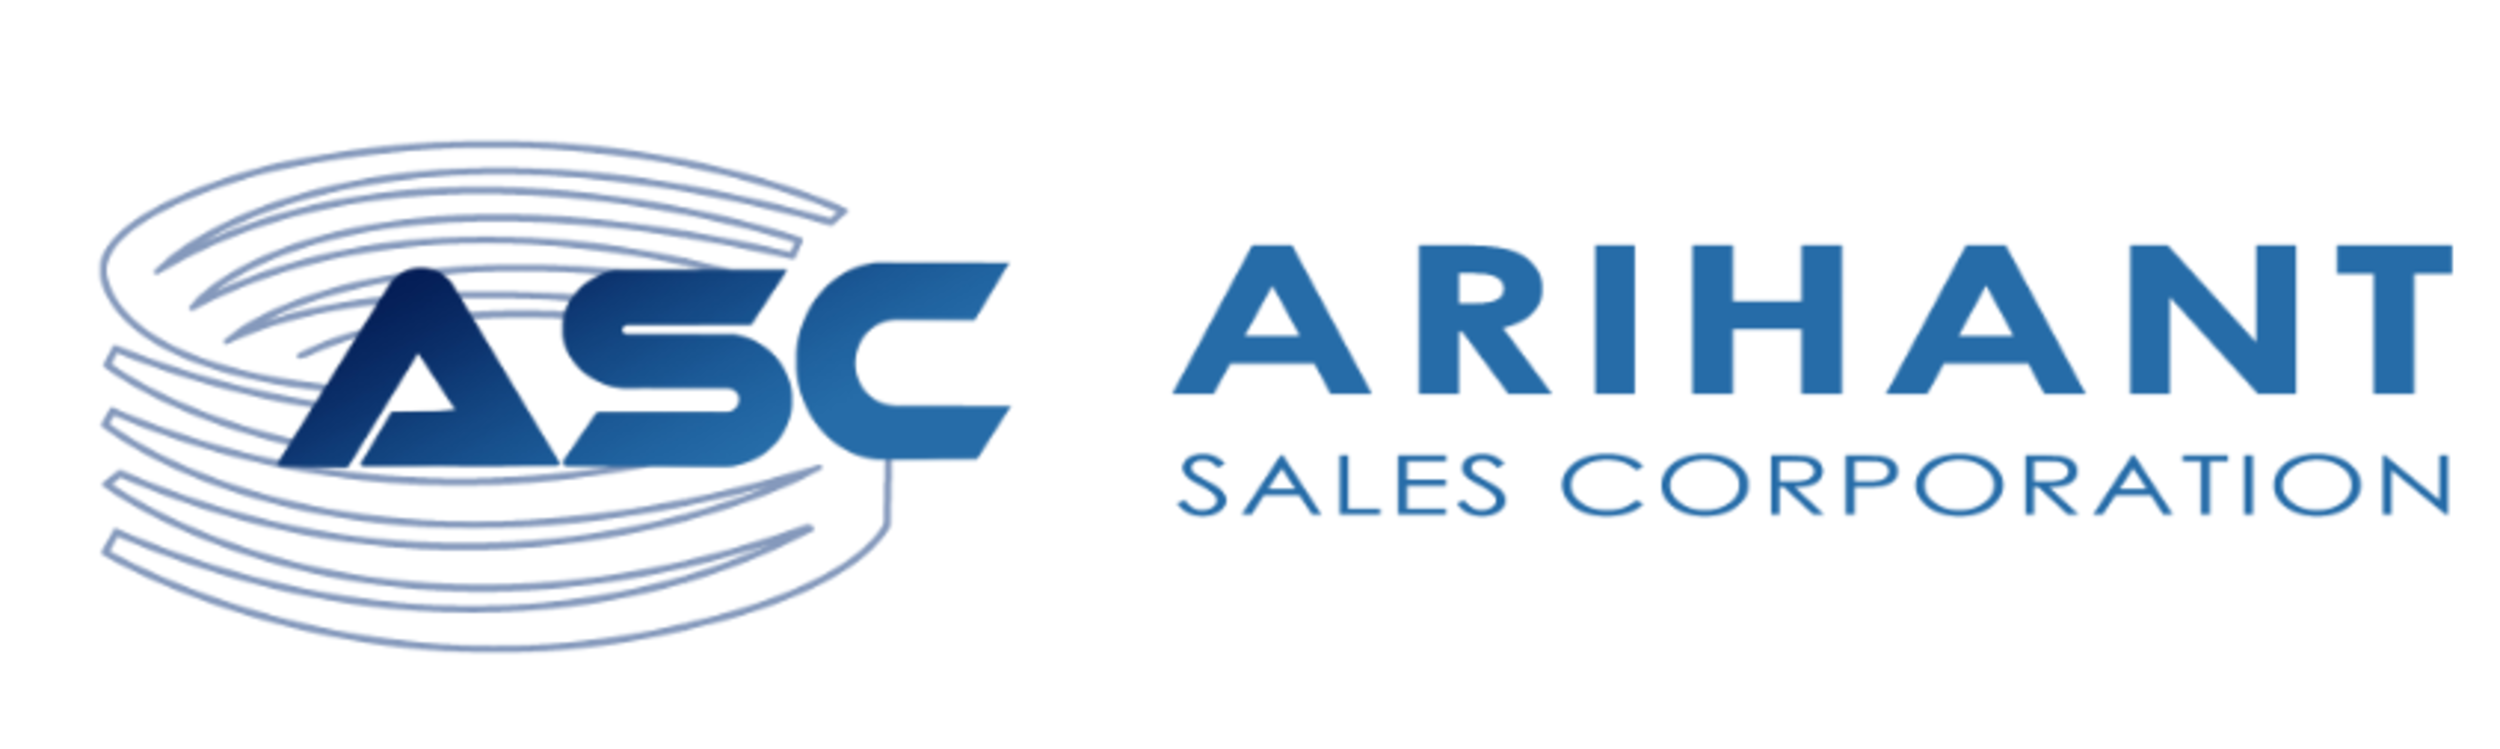 Arihant sales corporation